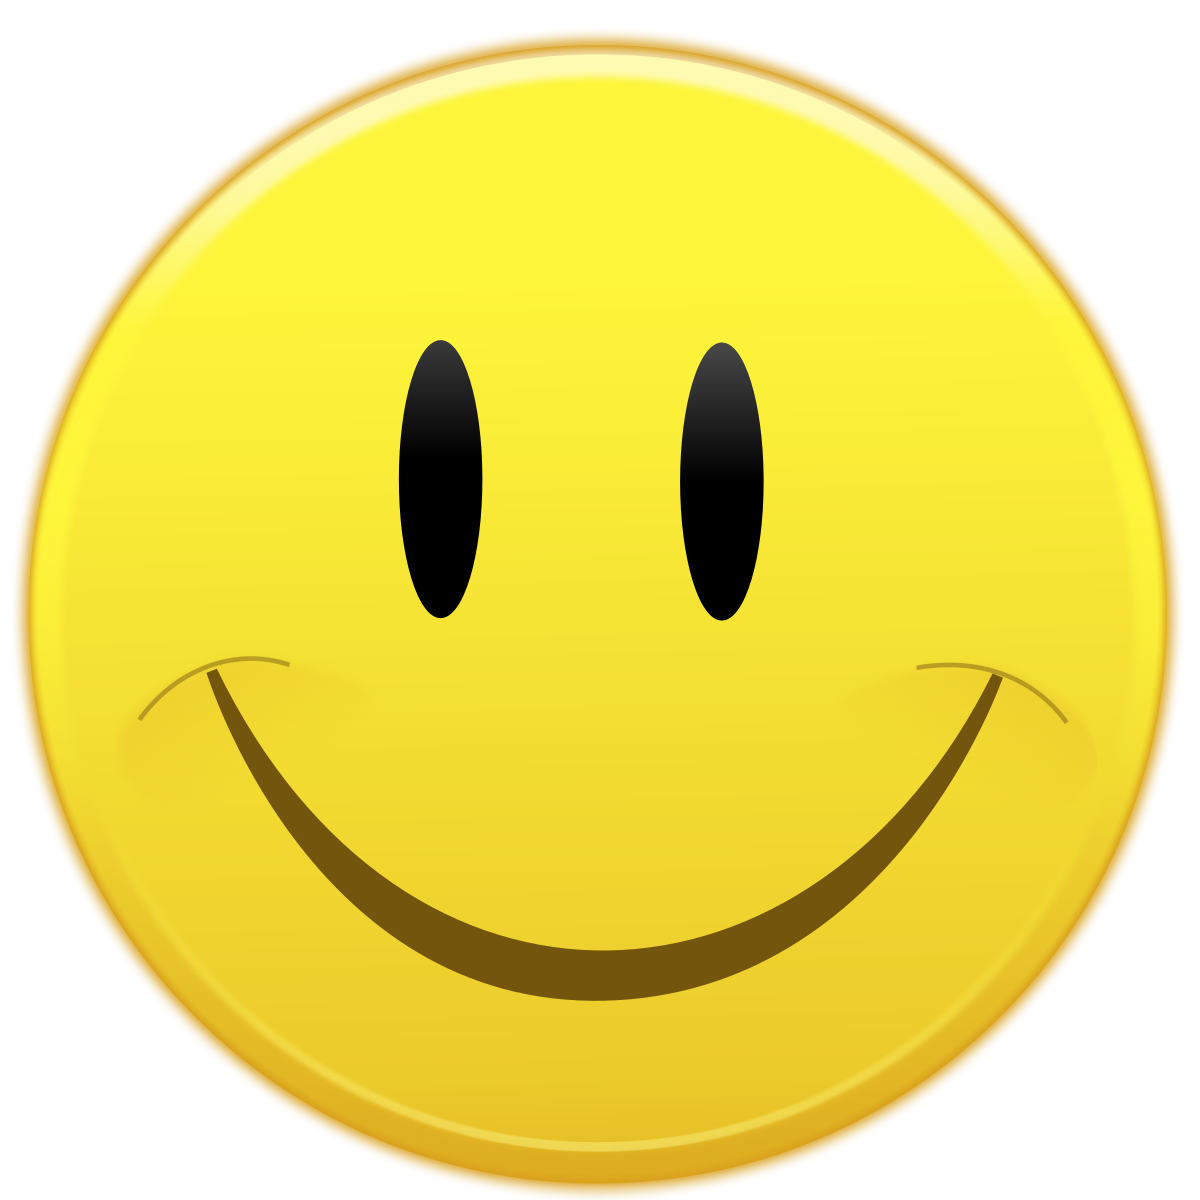 A smiling face emoji